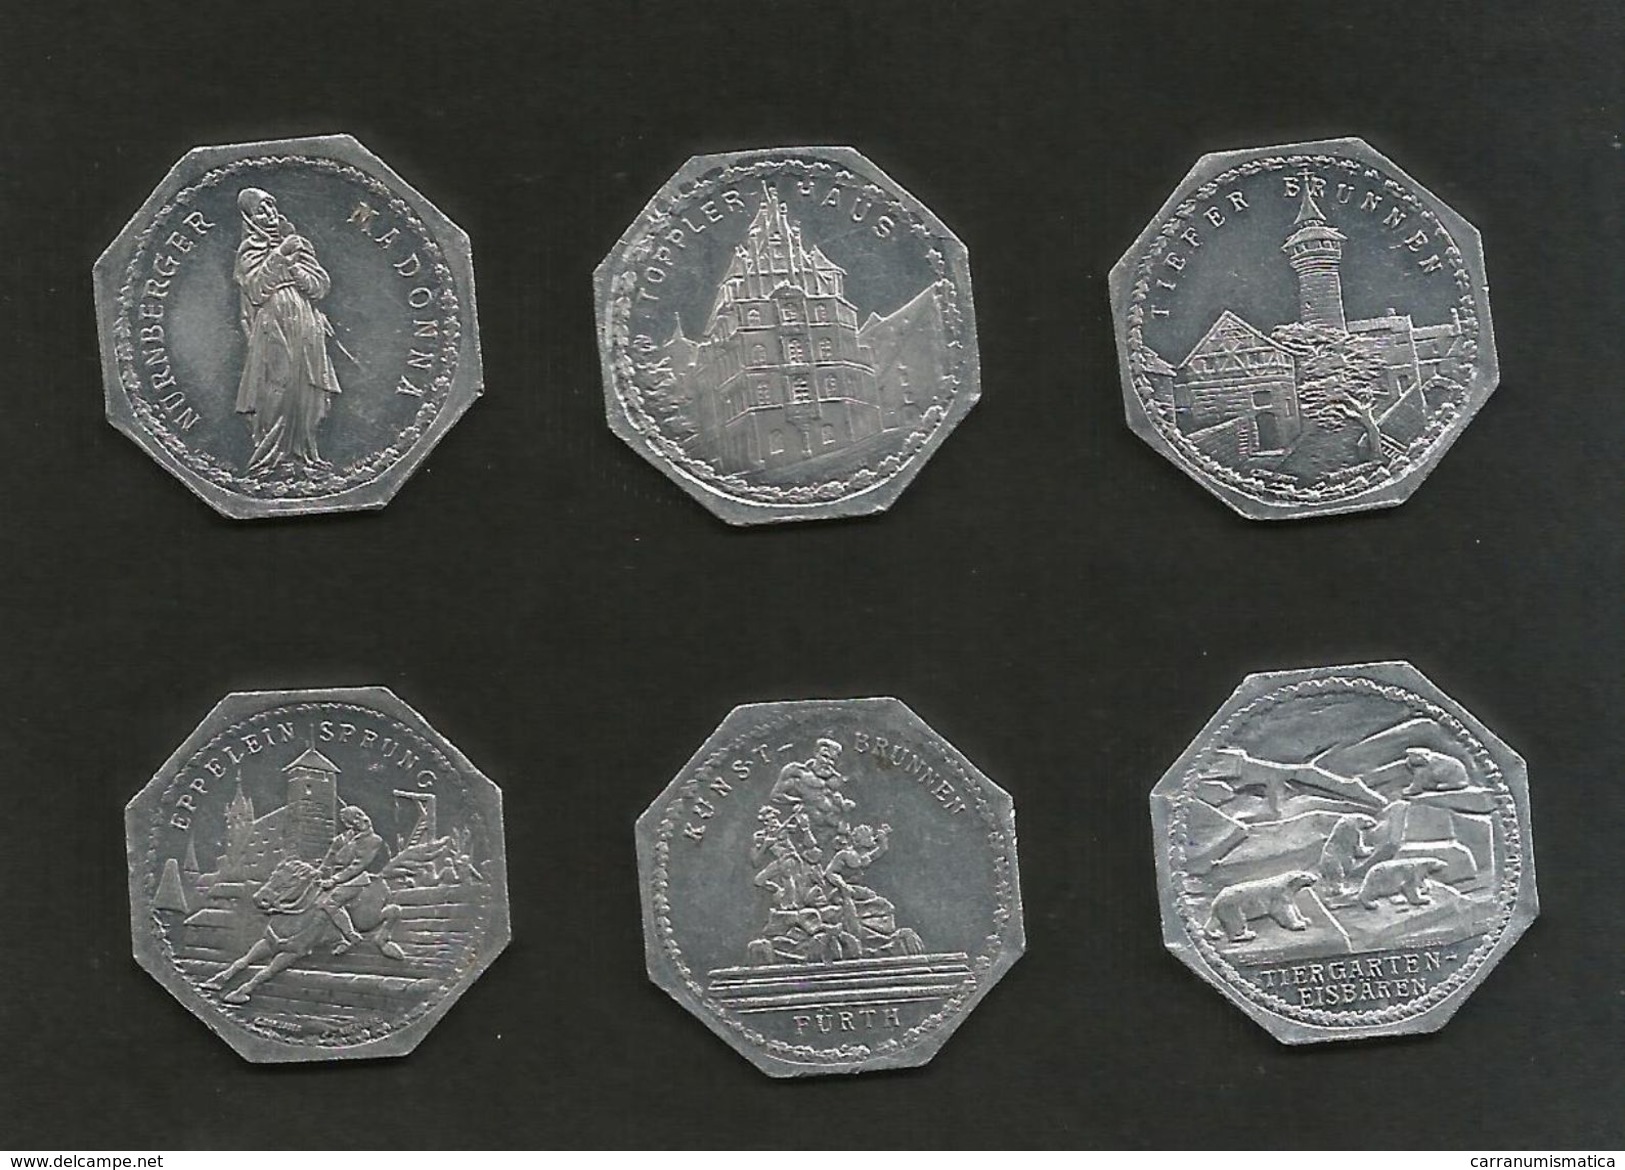 DEUTSCHLAND / GERMANY - NURNBERG STRASSENBAHN - 20 Pfennig (Monuments) - Lot Of 6 Tokens - Monetary/Of Necessity